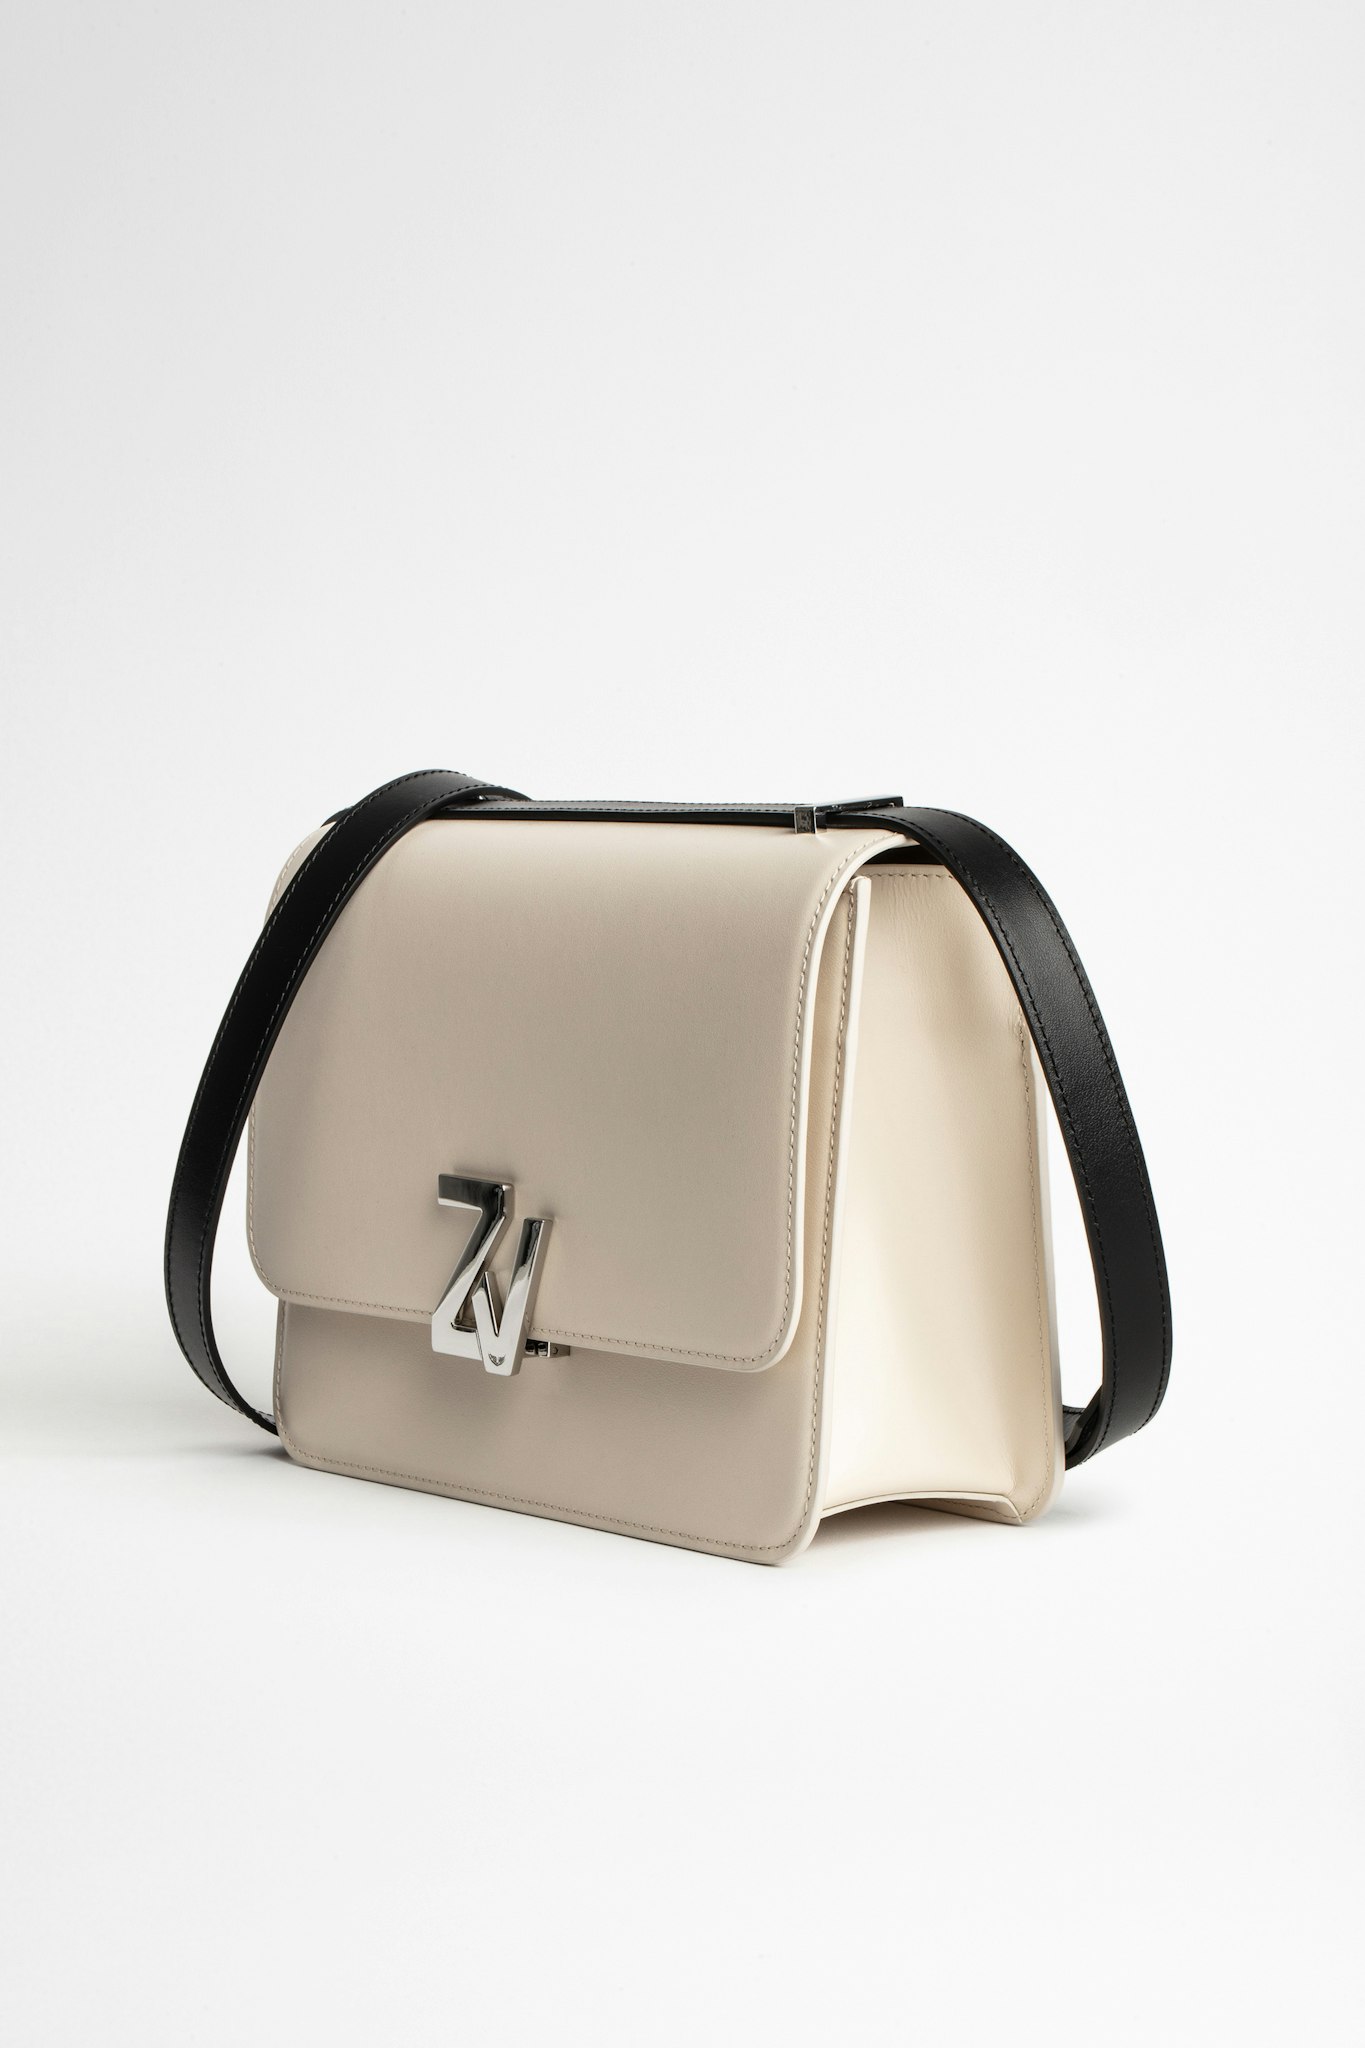 ZV Initiale Le City Bag - bag women | Zadig&Voltaire